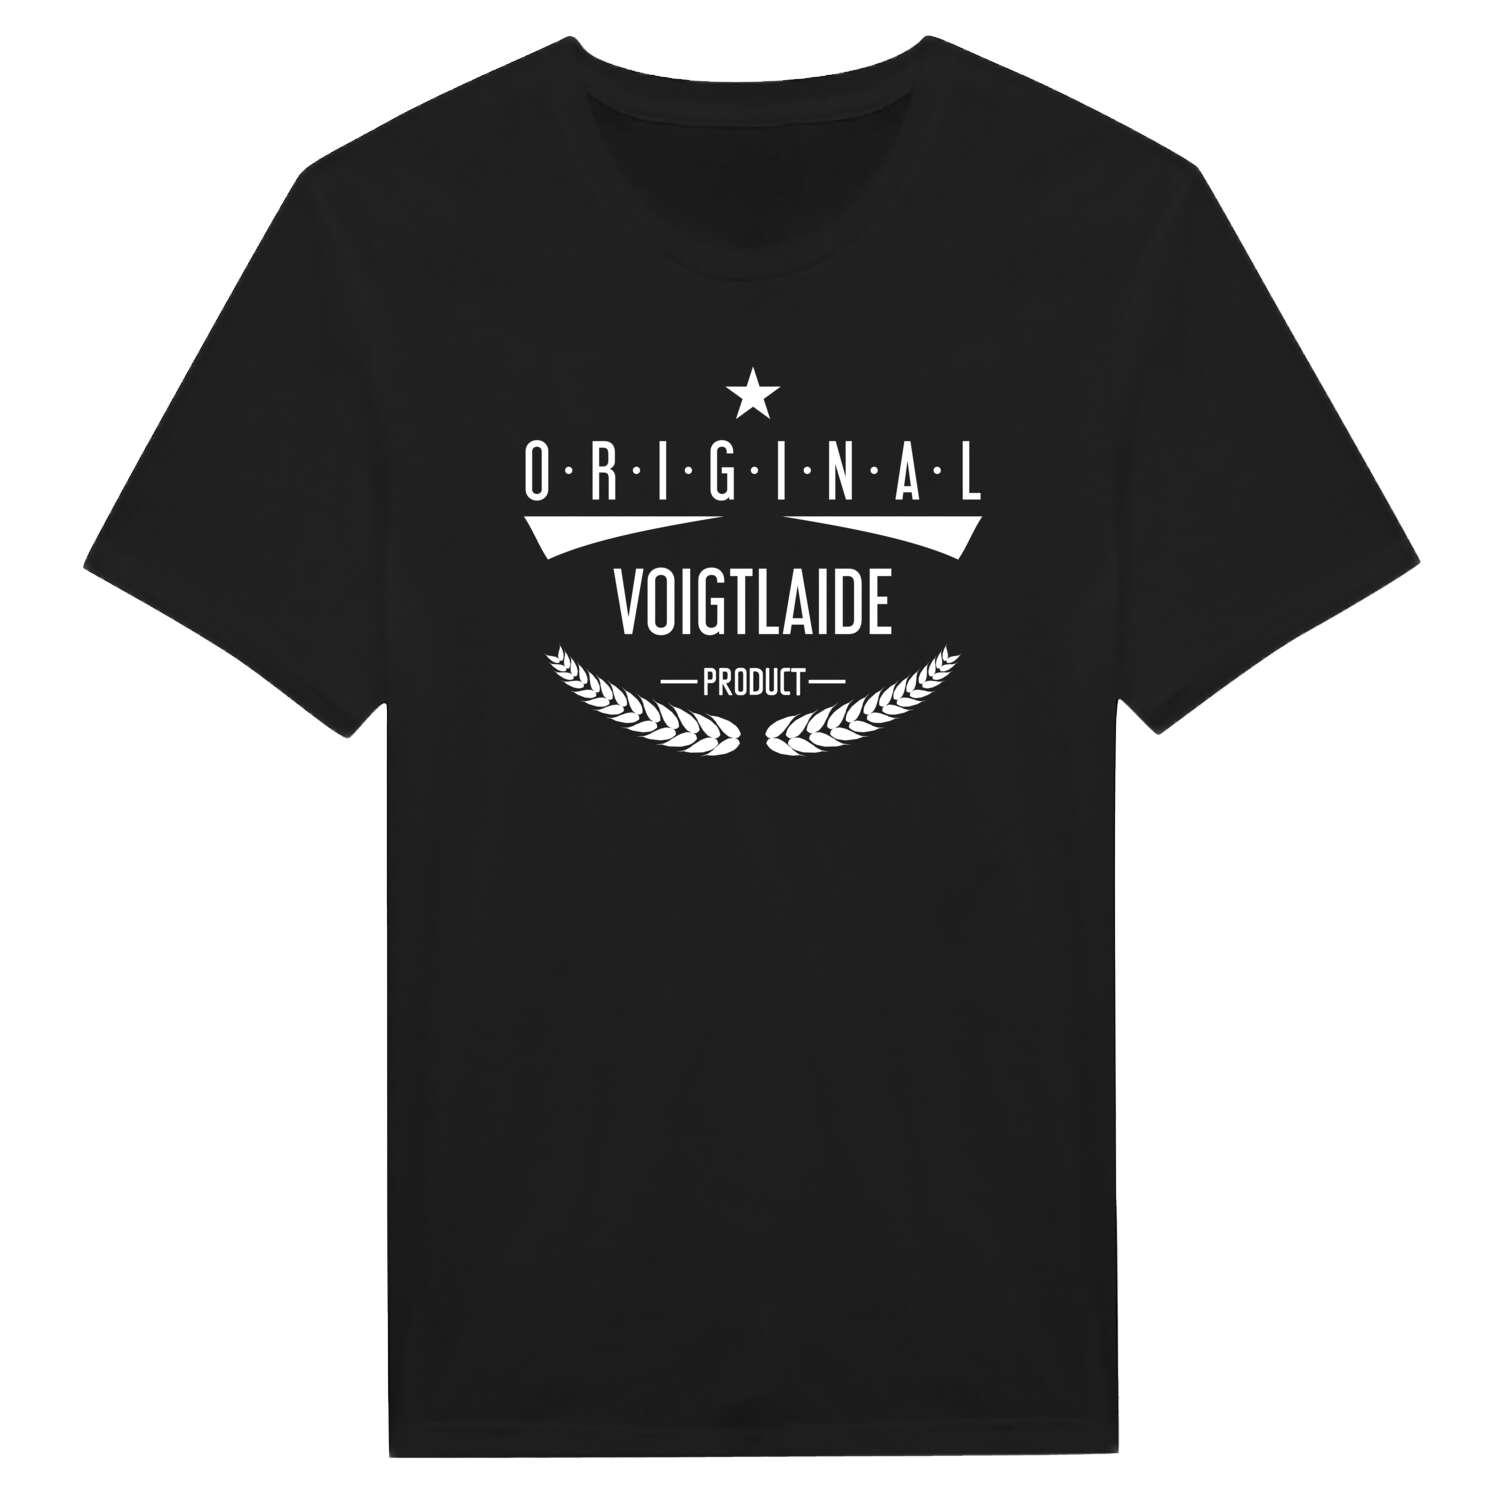 Voigtlaide T-Shirt »Original Product«